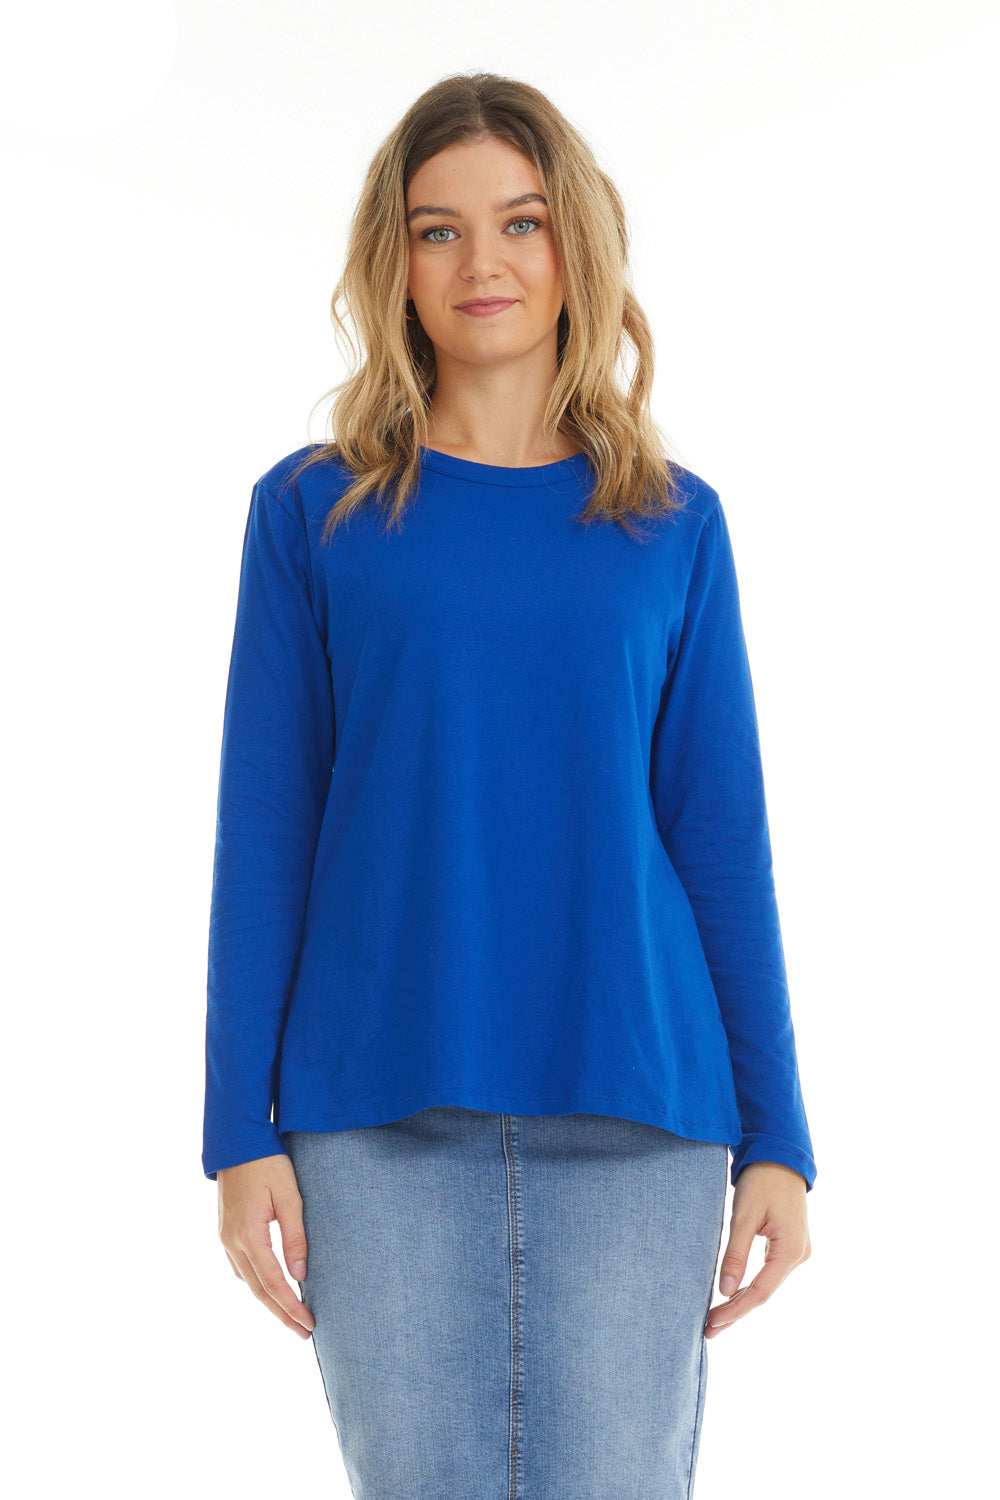 Royal Blue Long Sleeve Cotton T-shirt Top for Women 'B651'